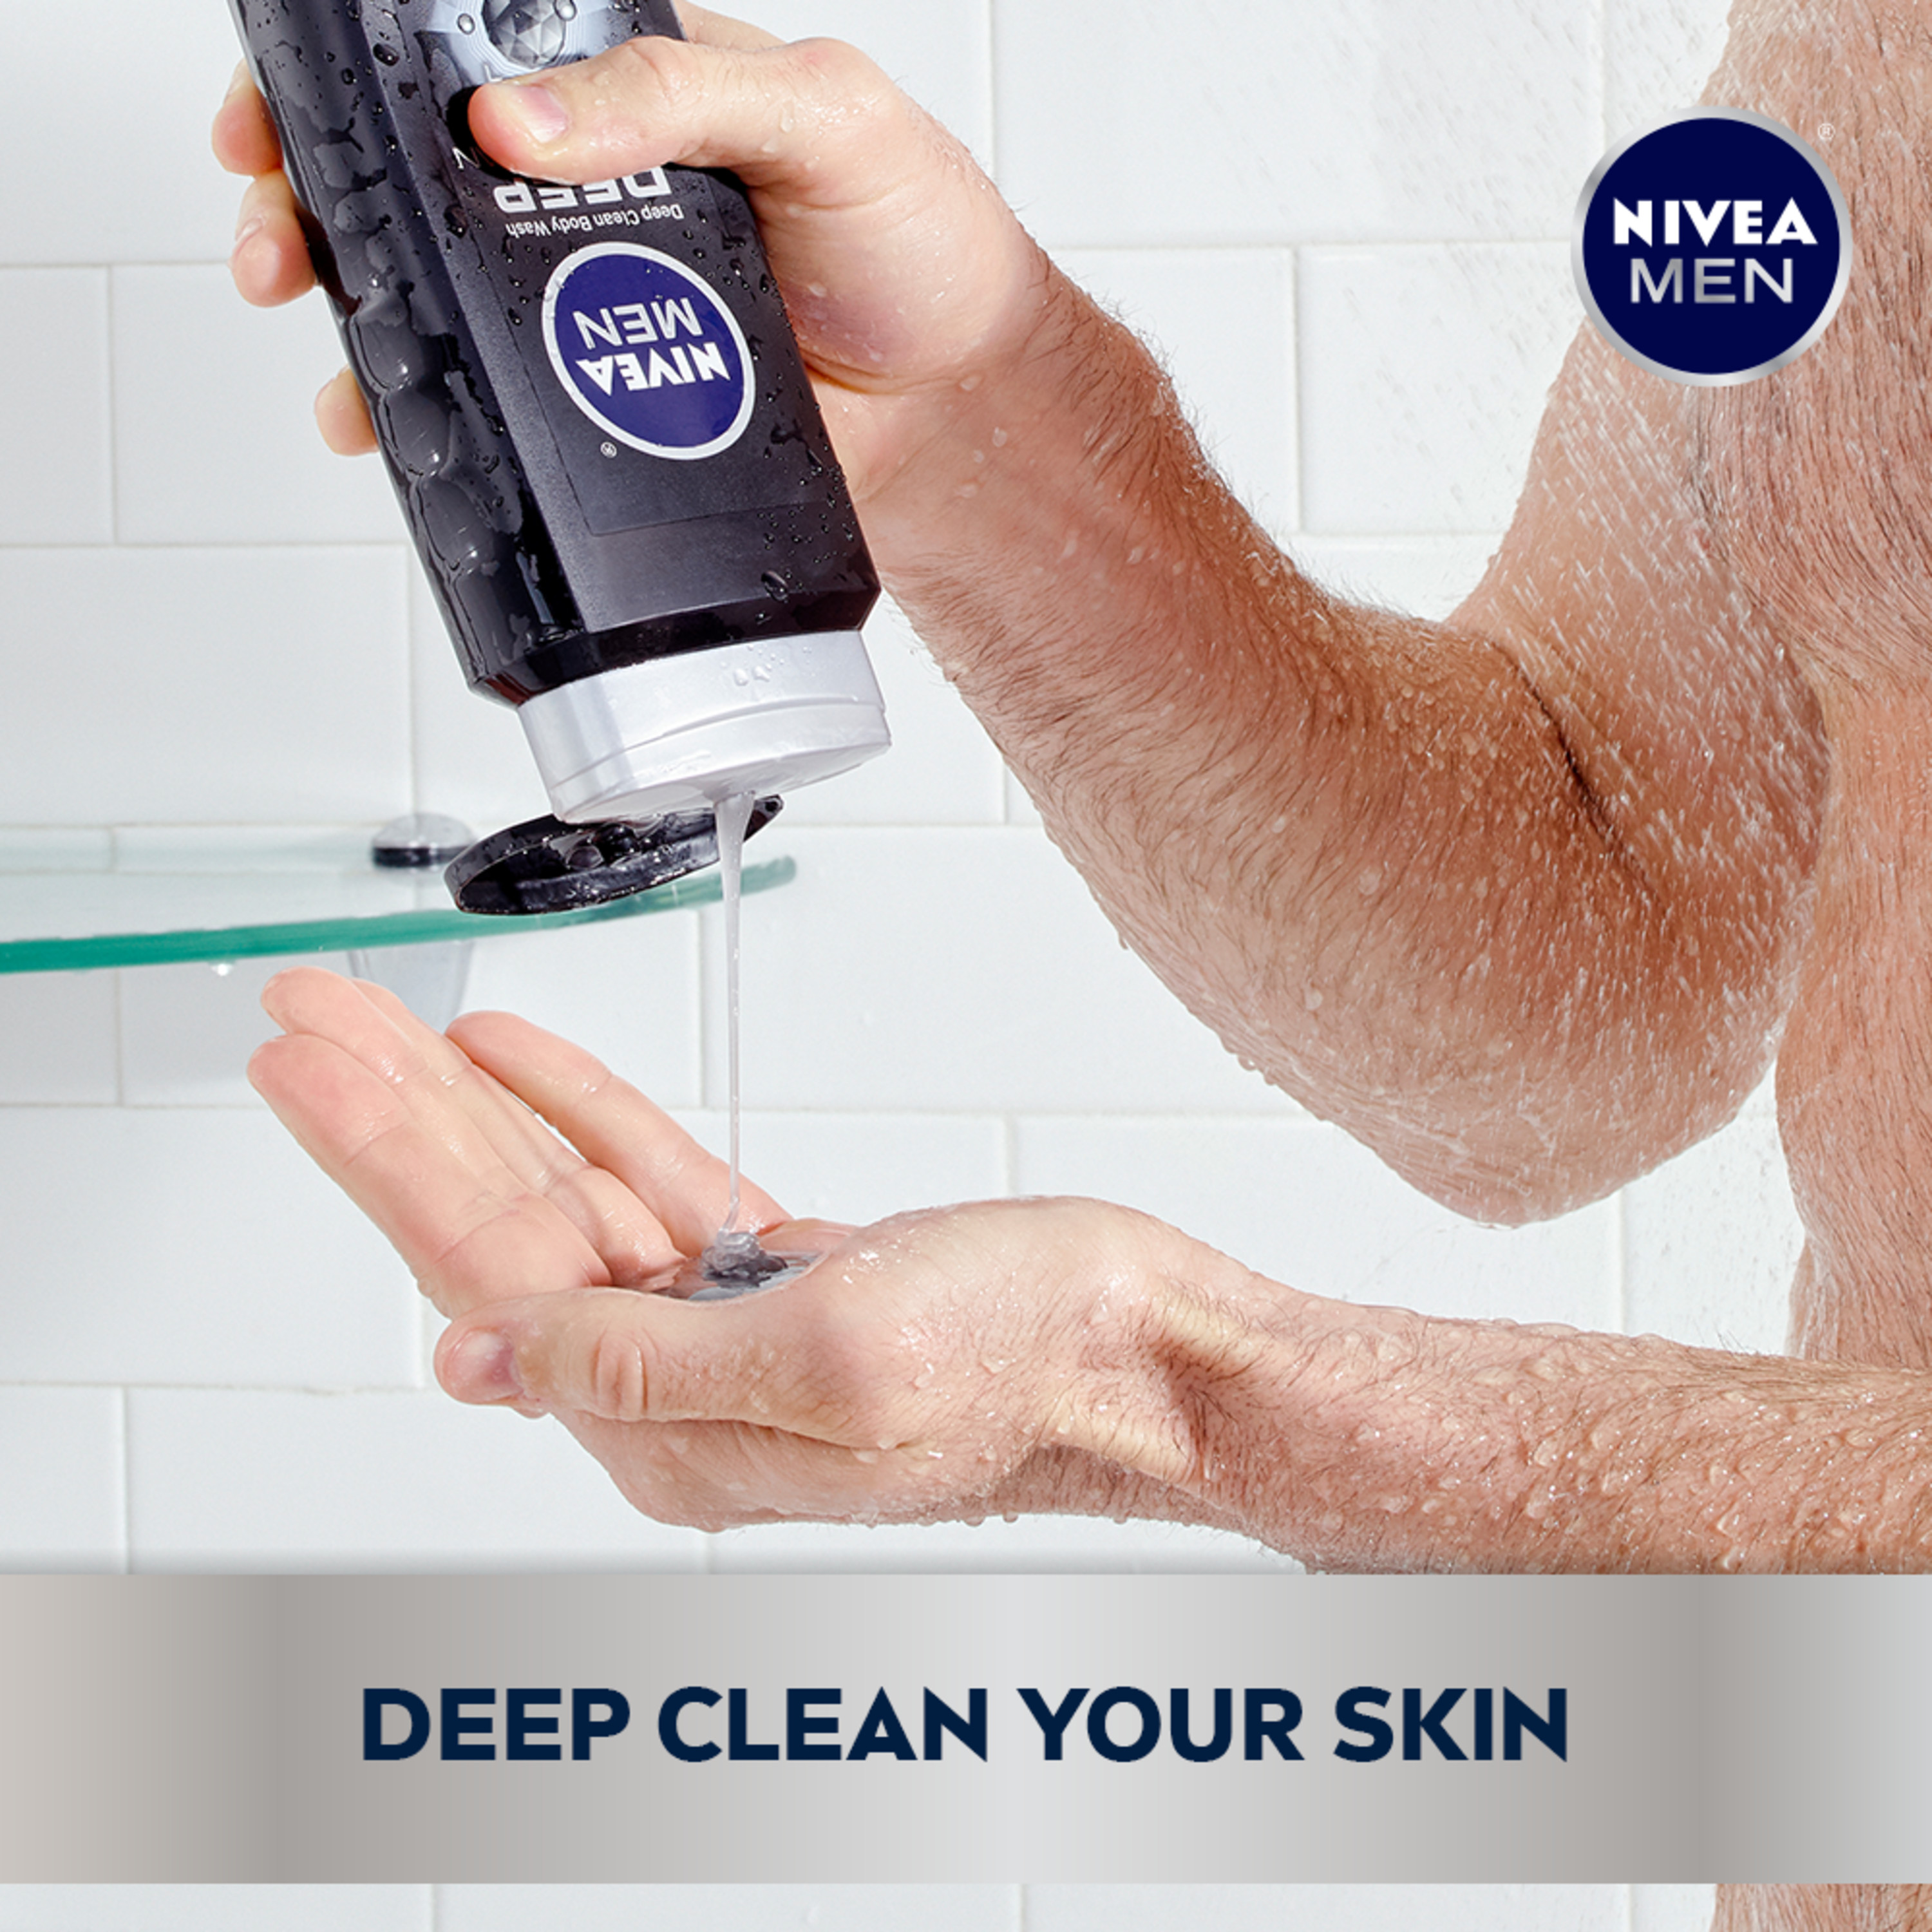 NIVEA MEN DEEP Active Clean Charcoal Body Wash, 16.9 Fl Oz Bottle - image 2 of 6